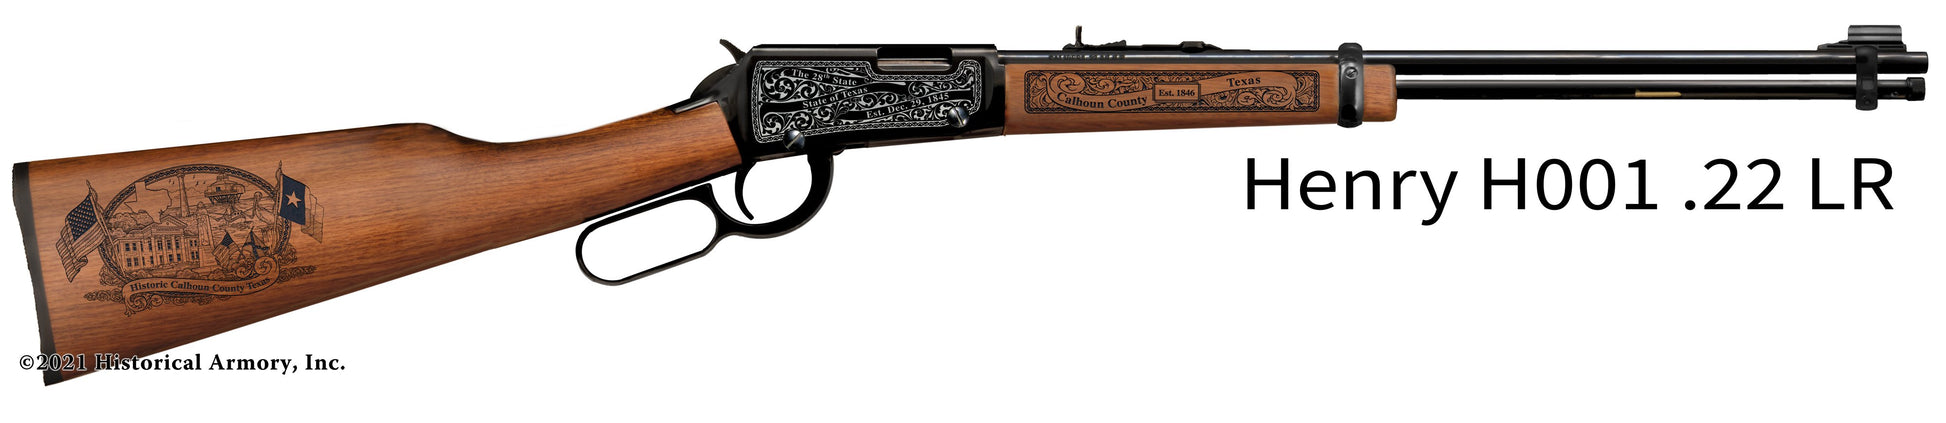 Calhoun County Texas Engraved Henry H001 Rifle